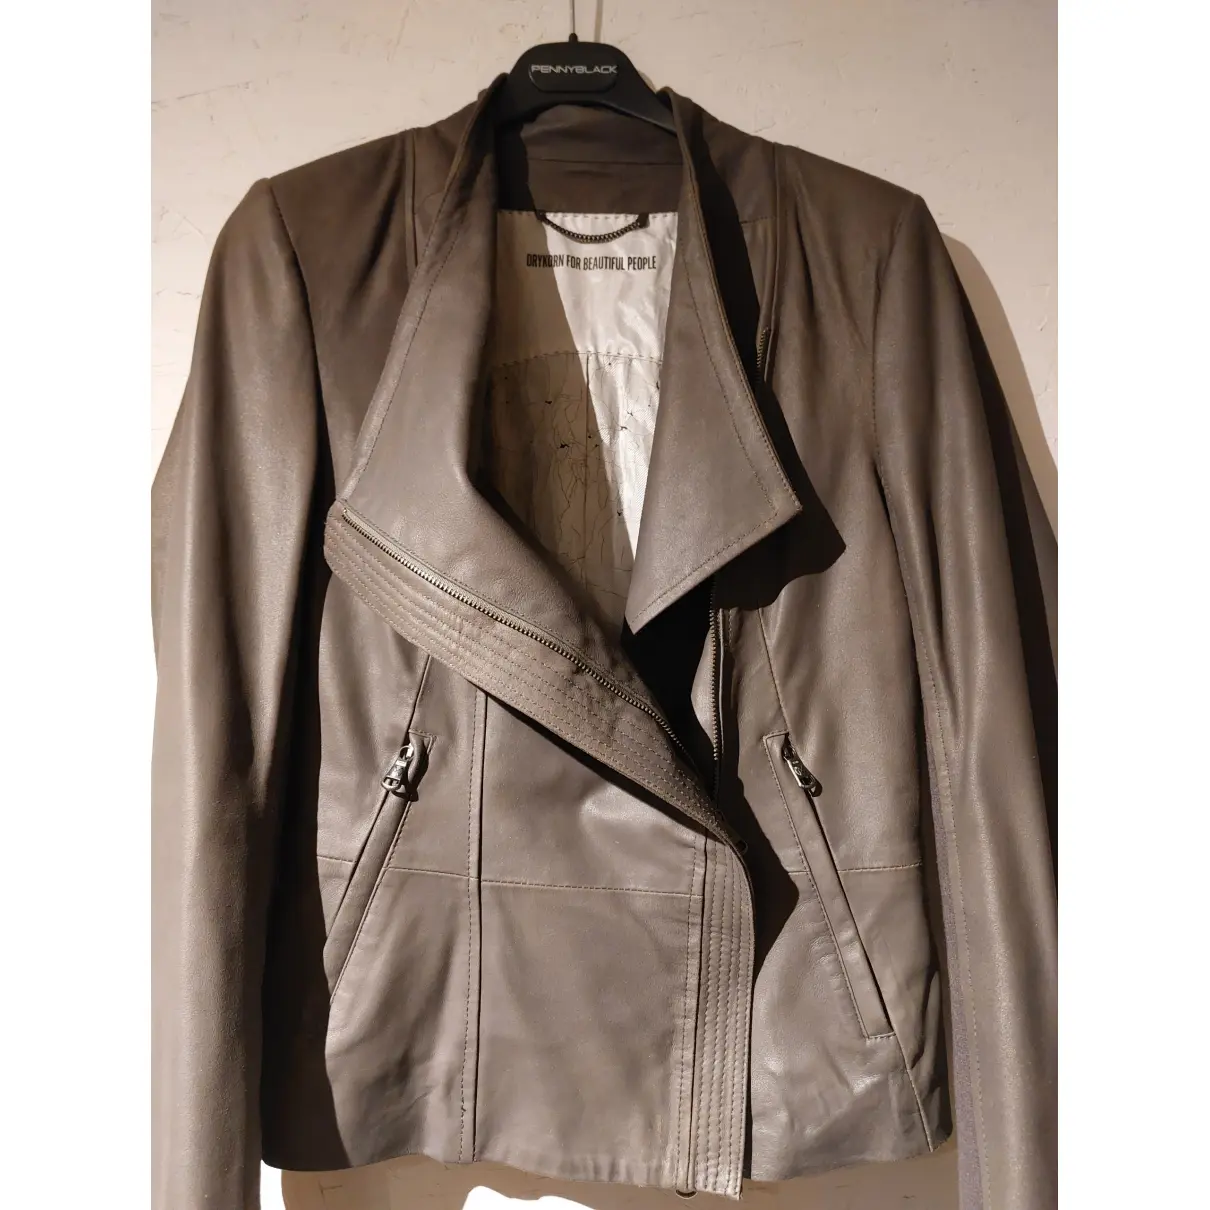 Buy Drykorn Leather jacket online